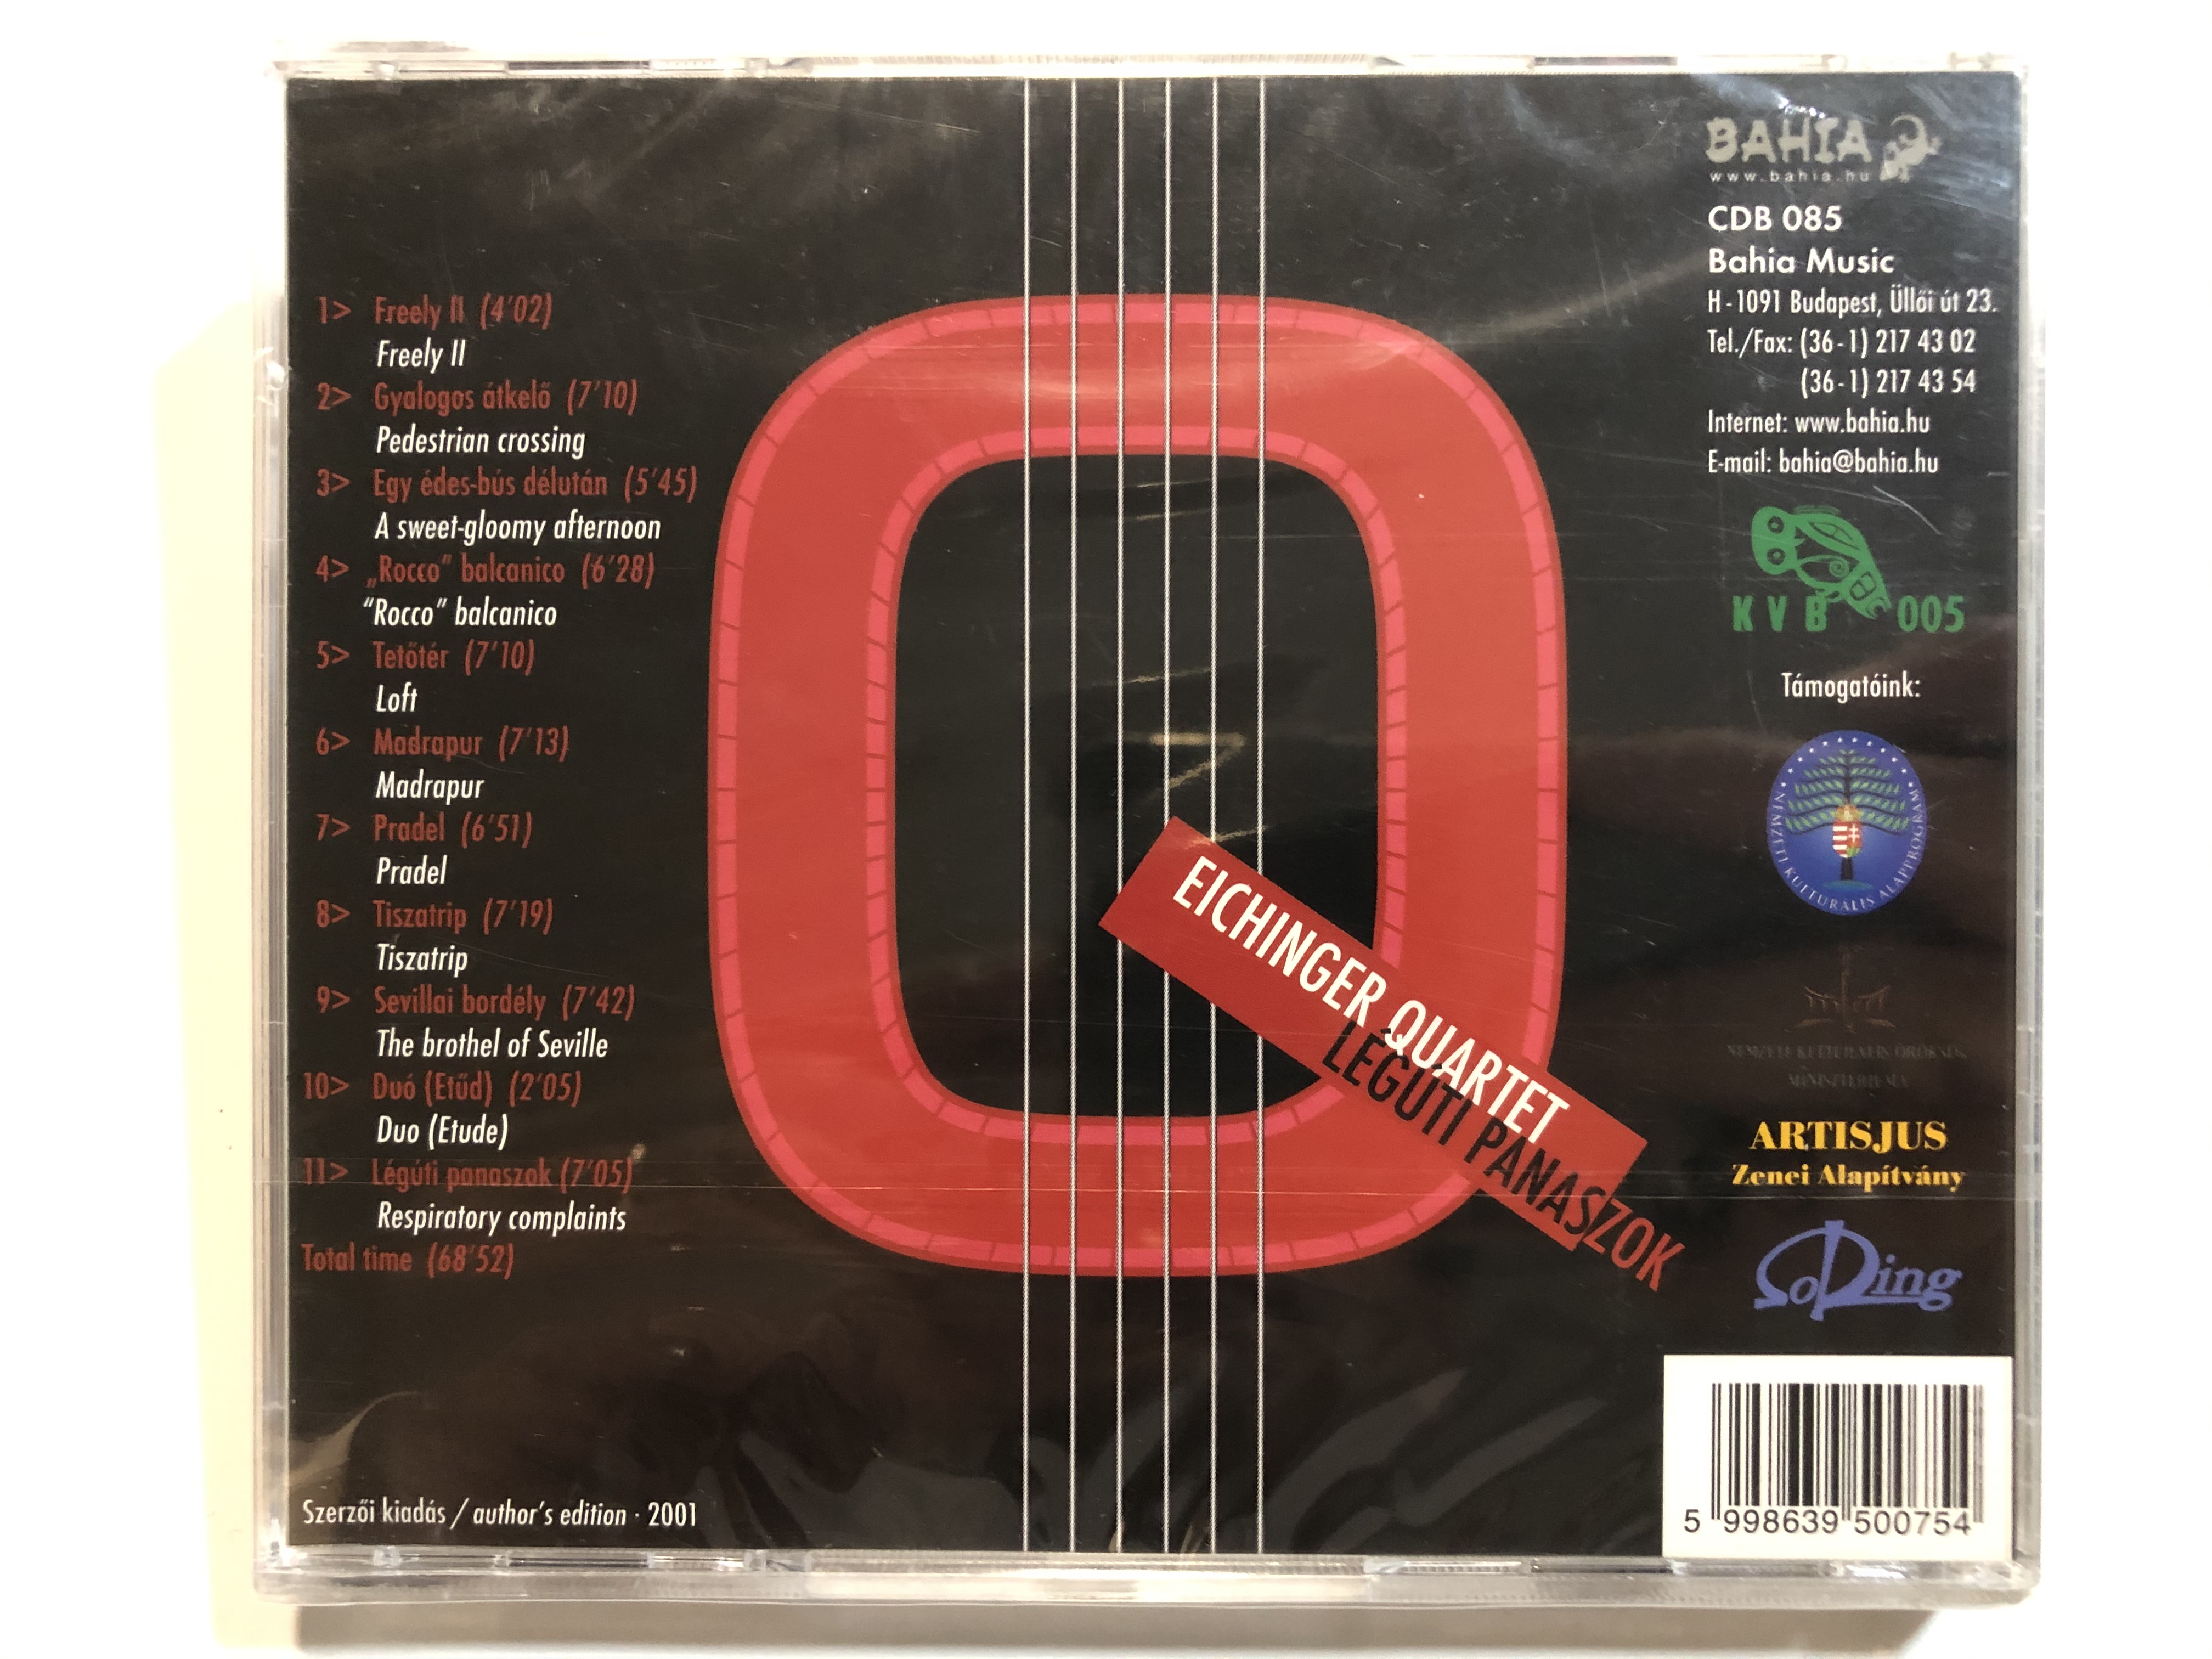 eichinger-quartet-l-g-ti-panaszok-bahia-audio-cd-2001-cdb-085-2-.jpg